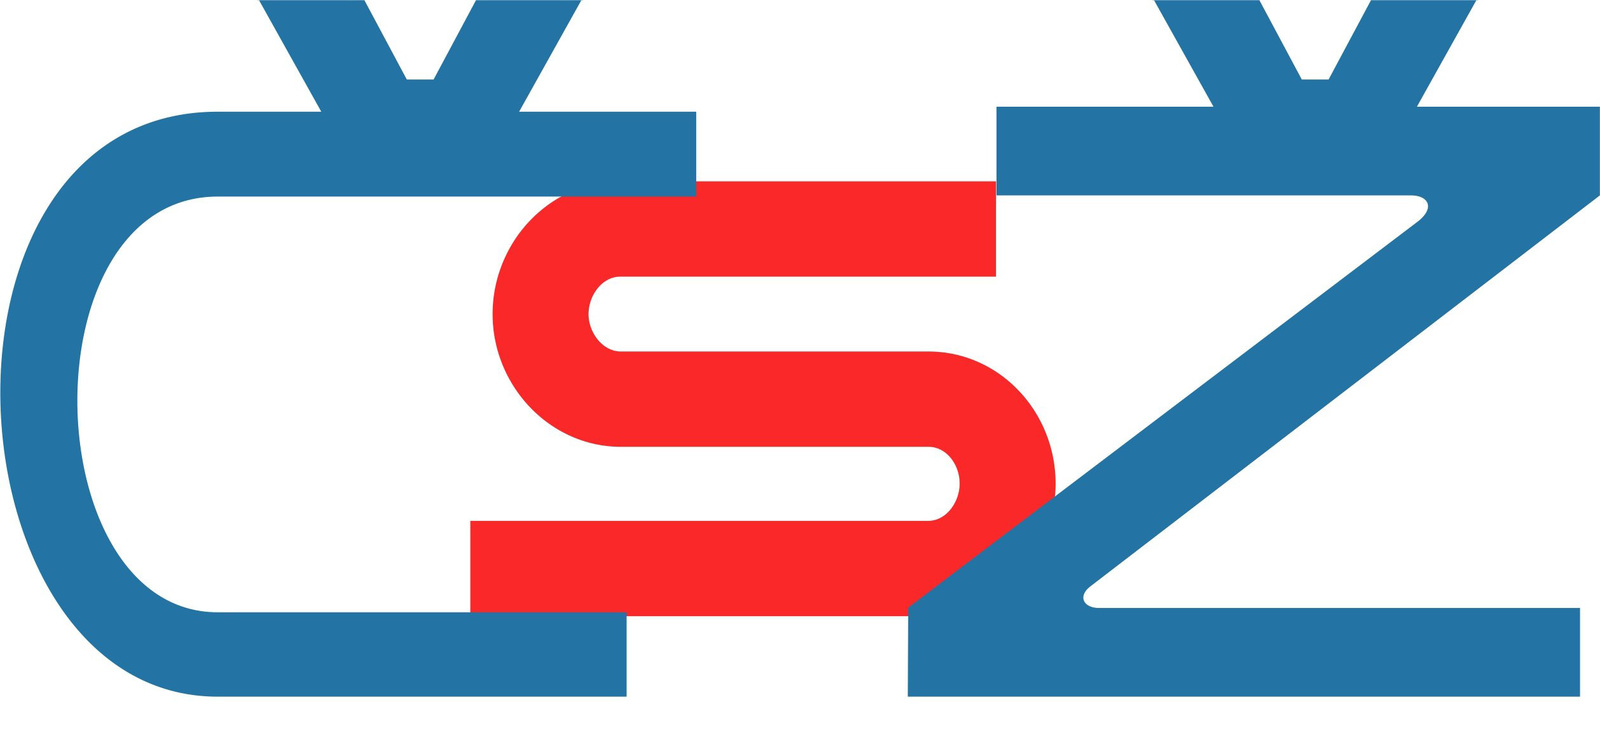 Svaz-žen-logo.jpg